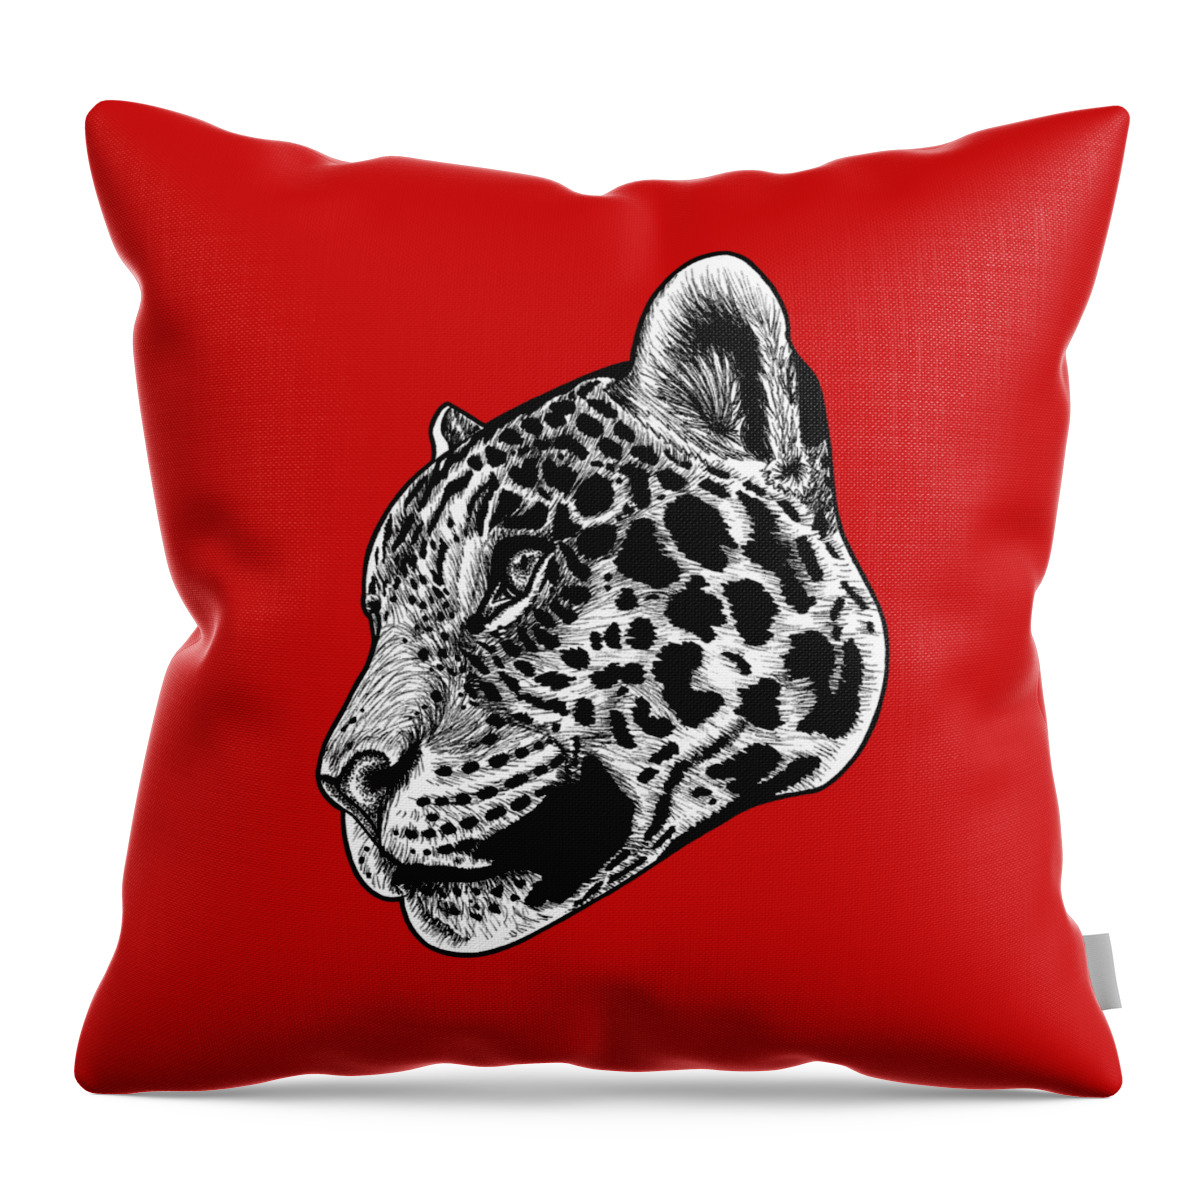 Jaguar Throw Pillow featuring the drawing Jaguar illustration by Loren Dowding